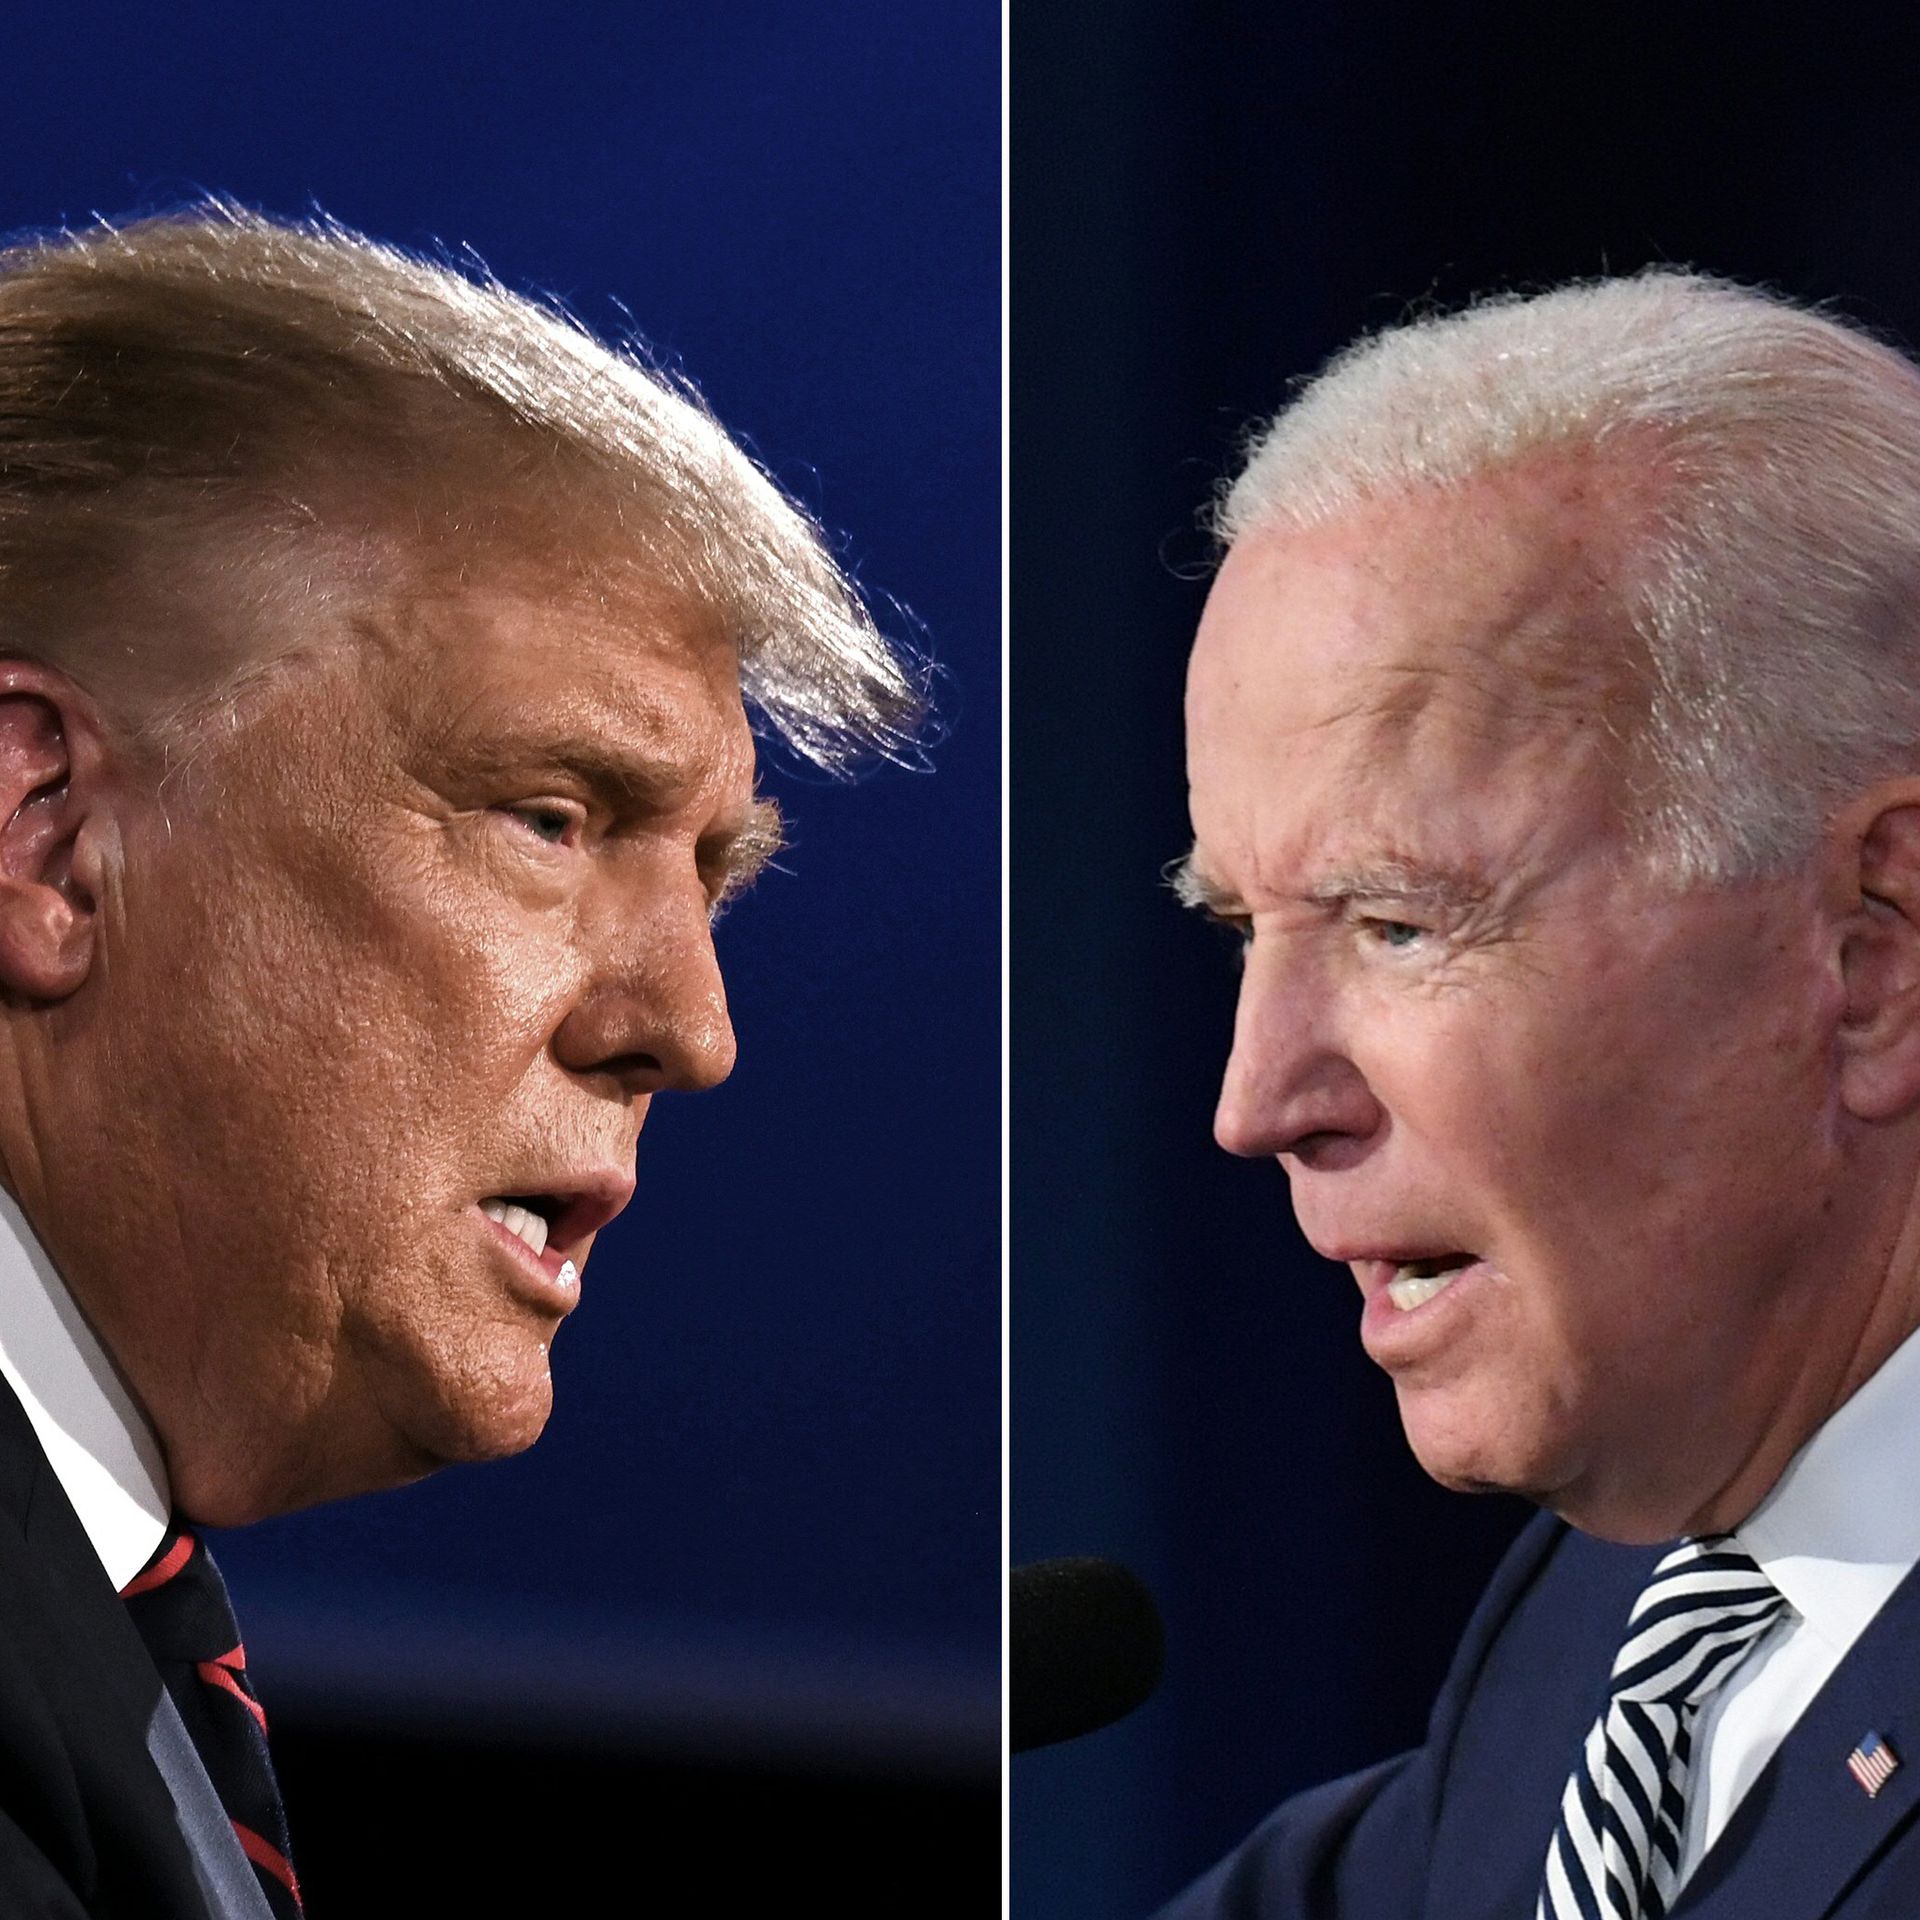 President Trump and Biden at the debate 